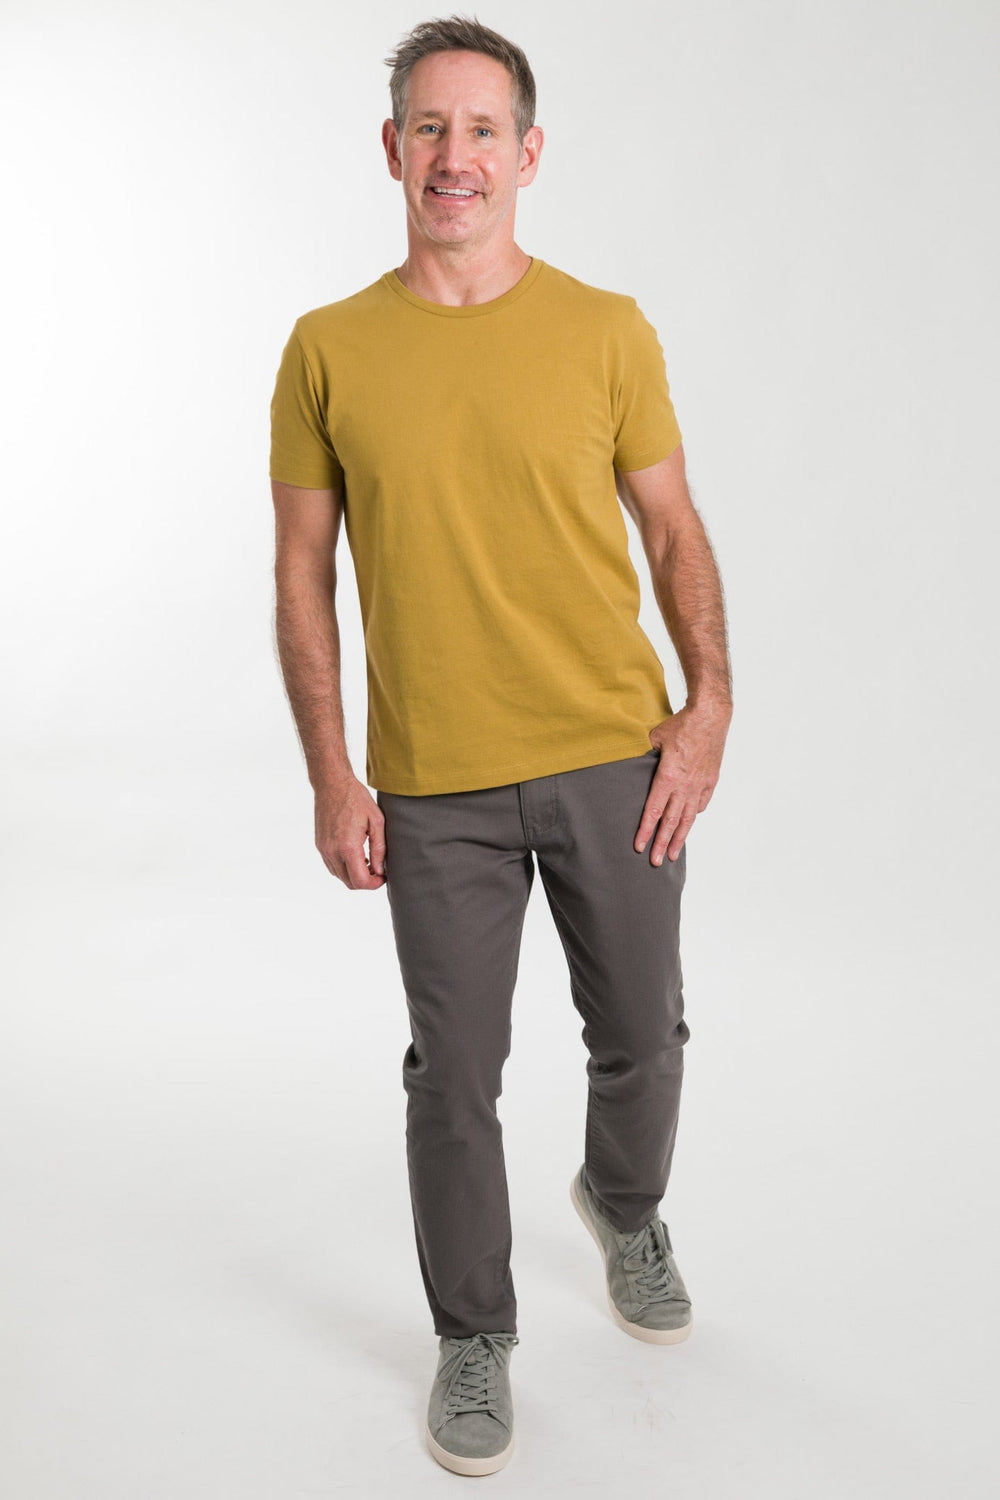 Buy Mustard Pima Cotton Crew Neck T-Shirt for Short Men | Ash & Erie   Premium Tee